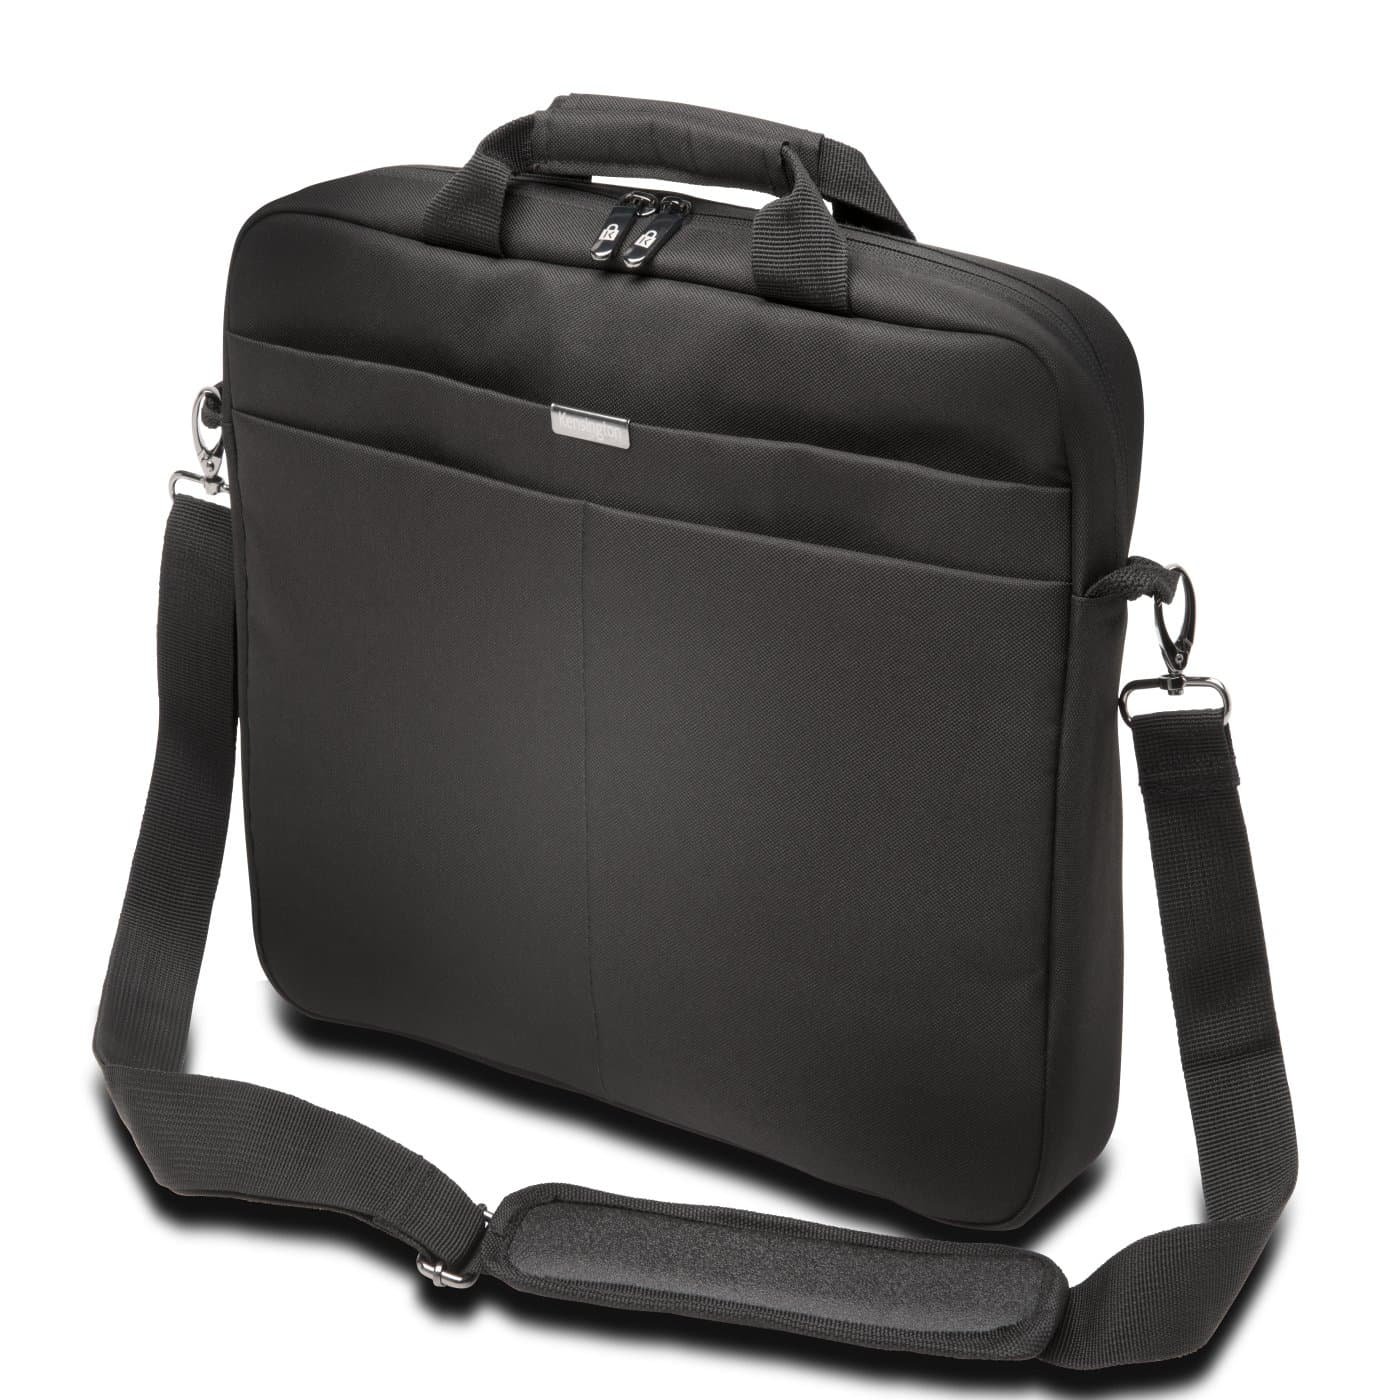 Kensington LS240 Laptop & Tablet Carrying Case for 14.4 Inch Laptops - Black